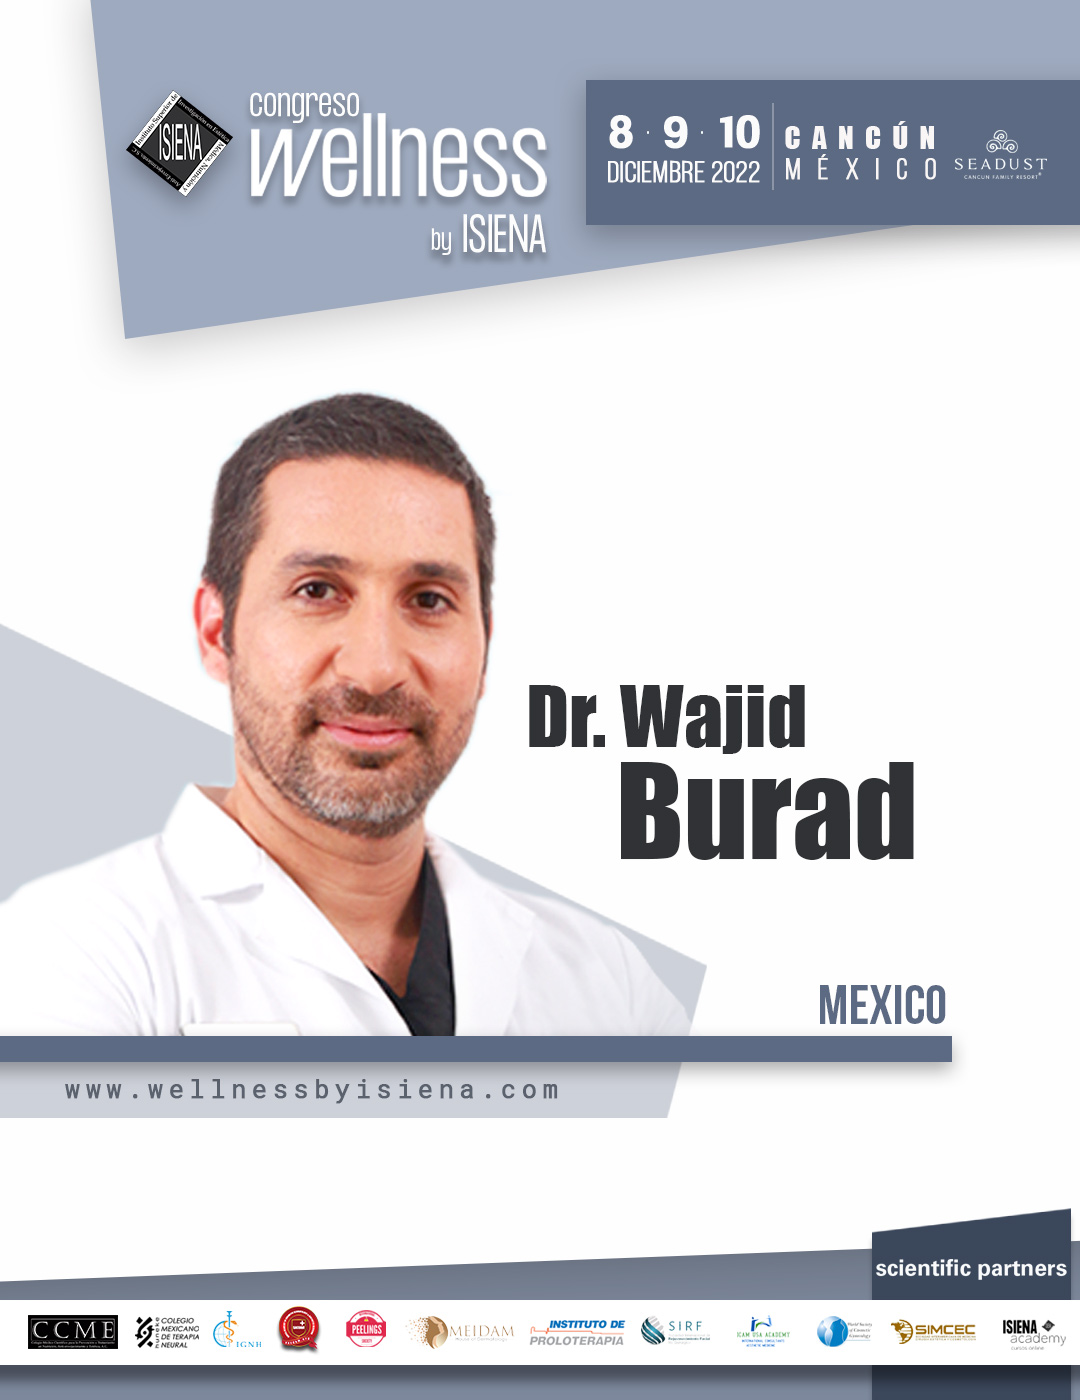 Dr Wajid Burad Wellness by ISIENA